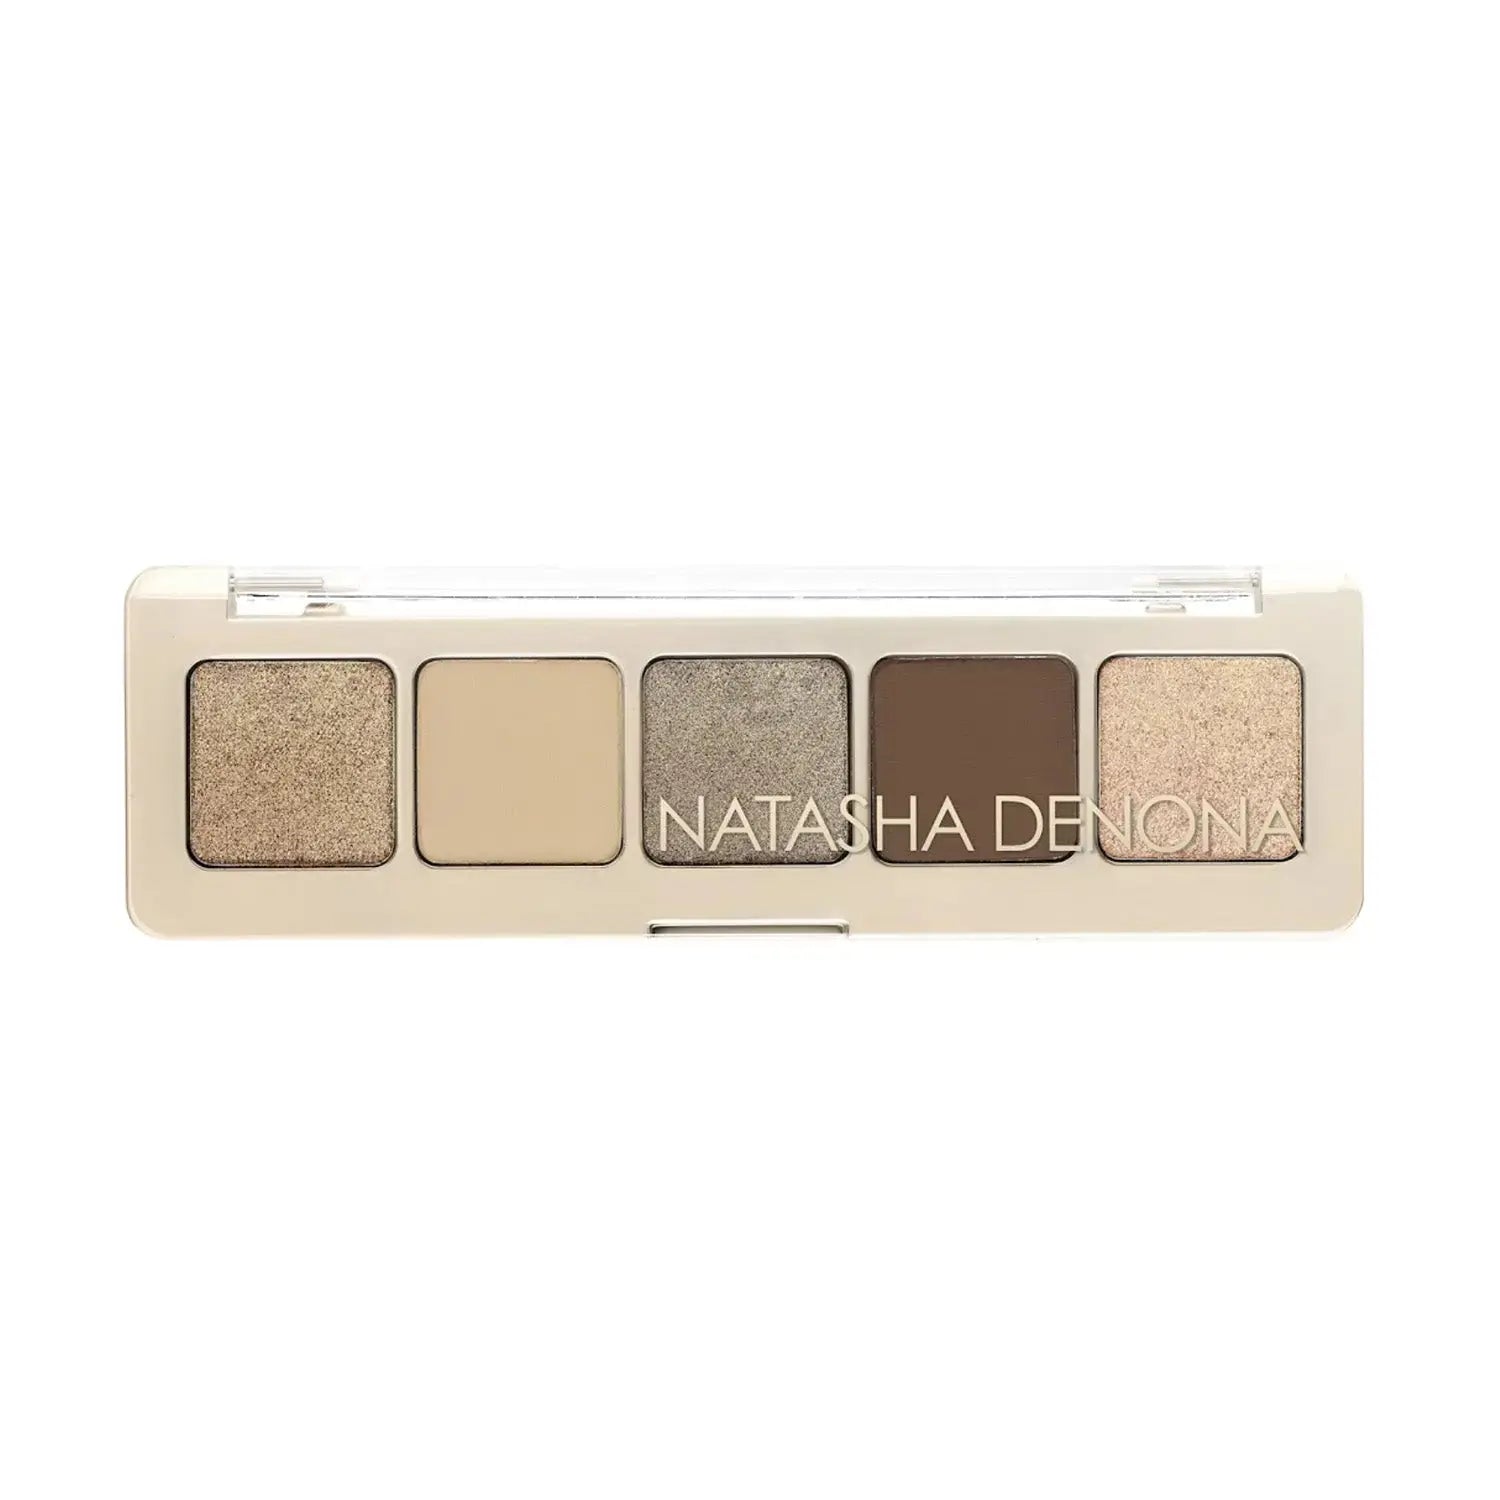 Mini glam eyeshadow palette - פלטת צלליות לעיניים מיני גלאם Natasha Denona